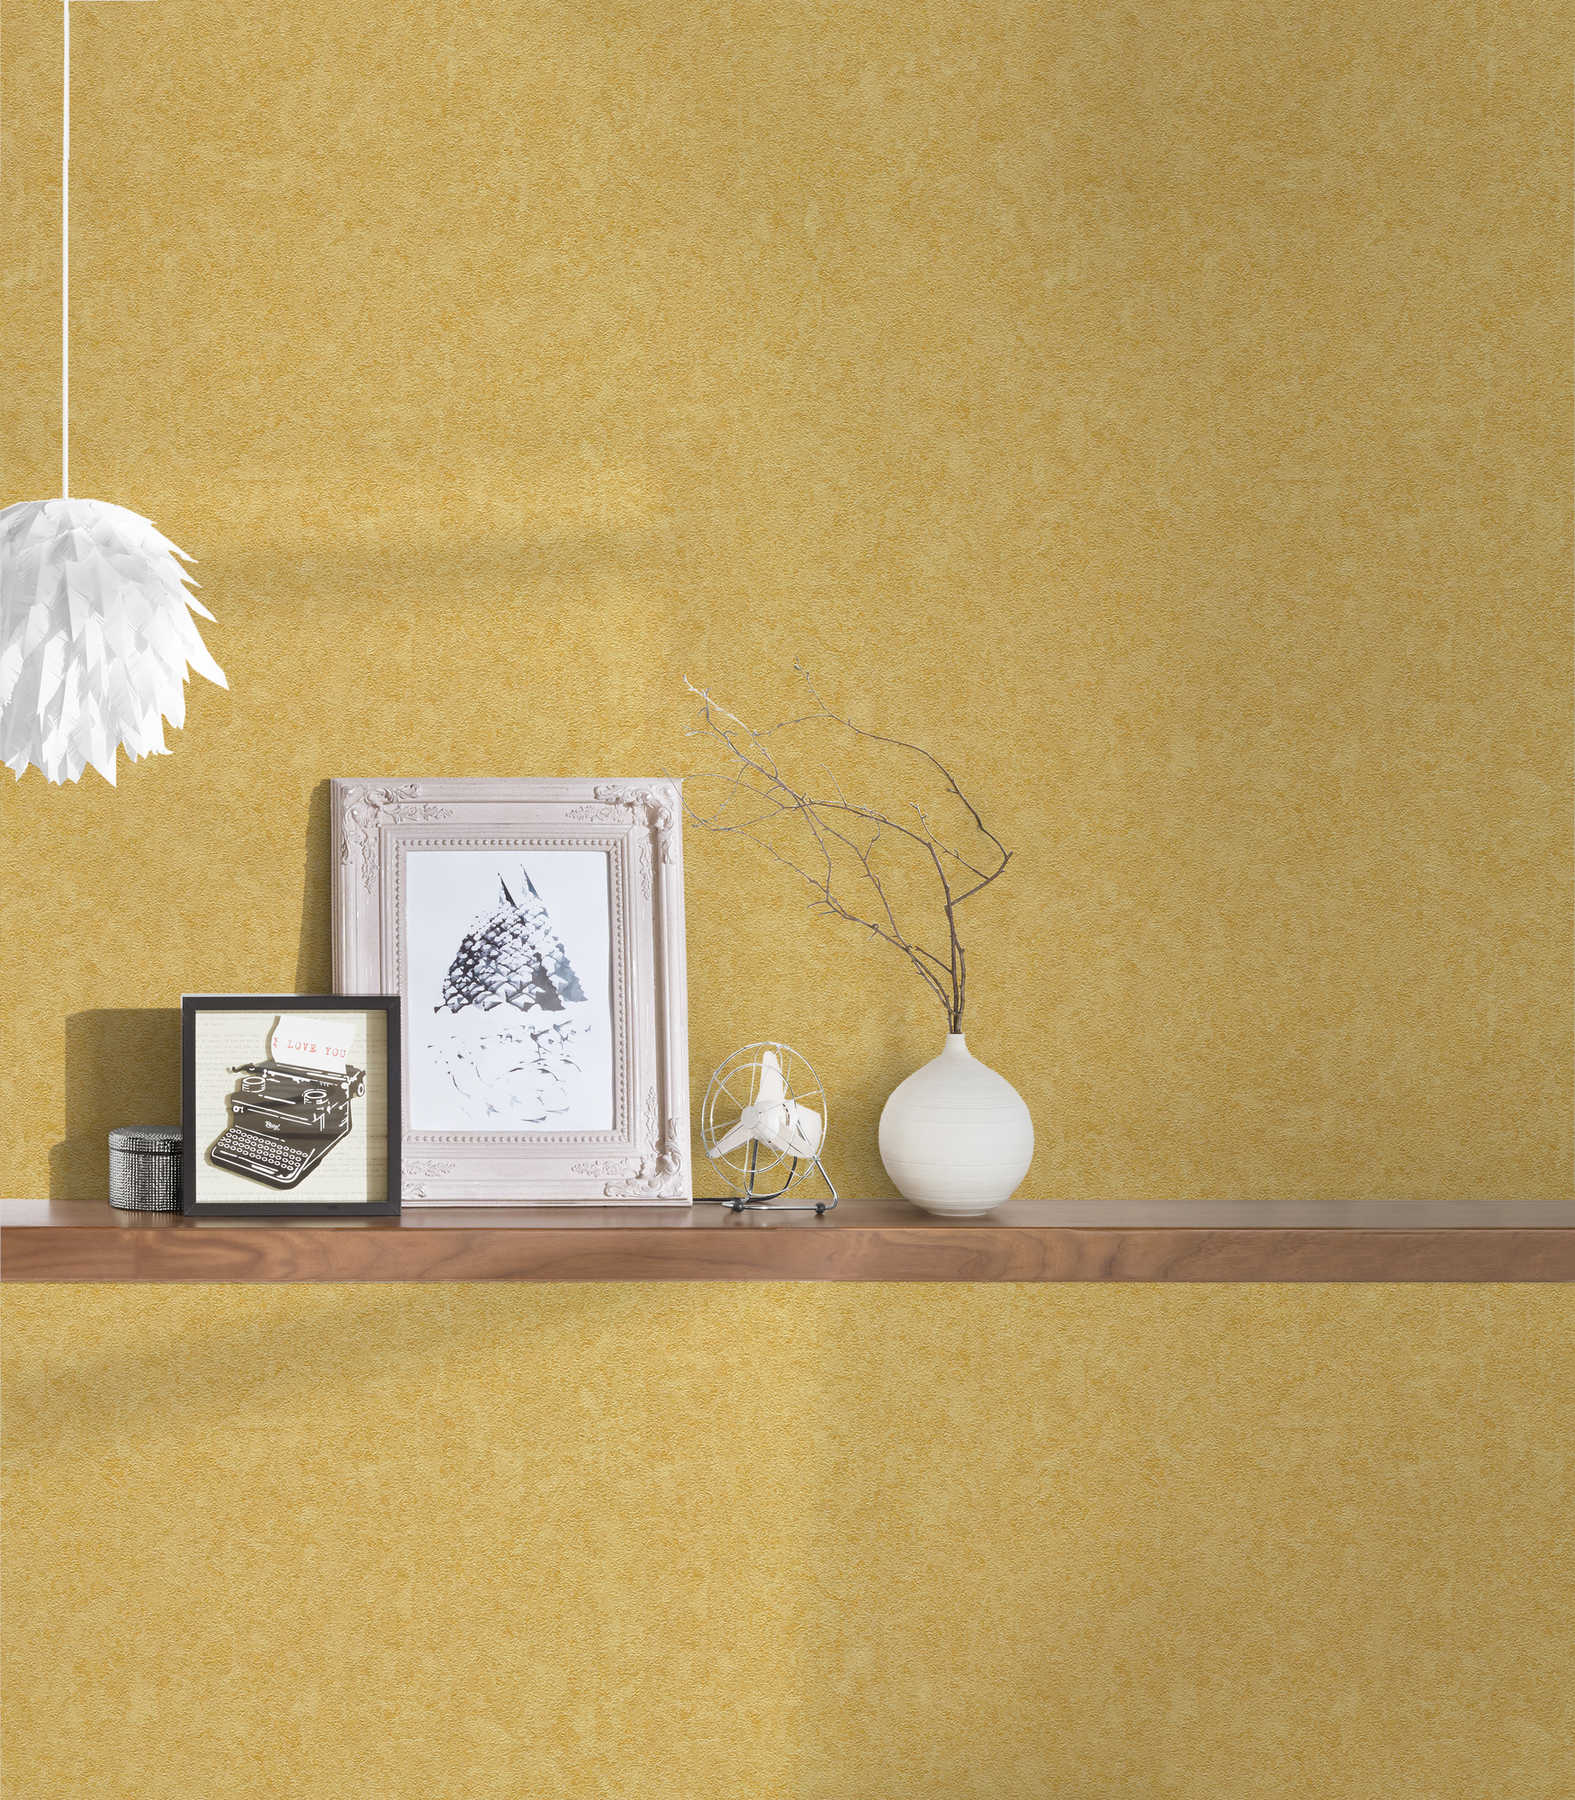             Golden VERSACE plain wallpaper with fine structure - gold
        